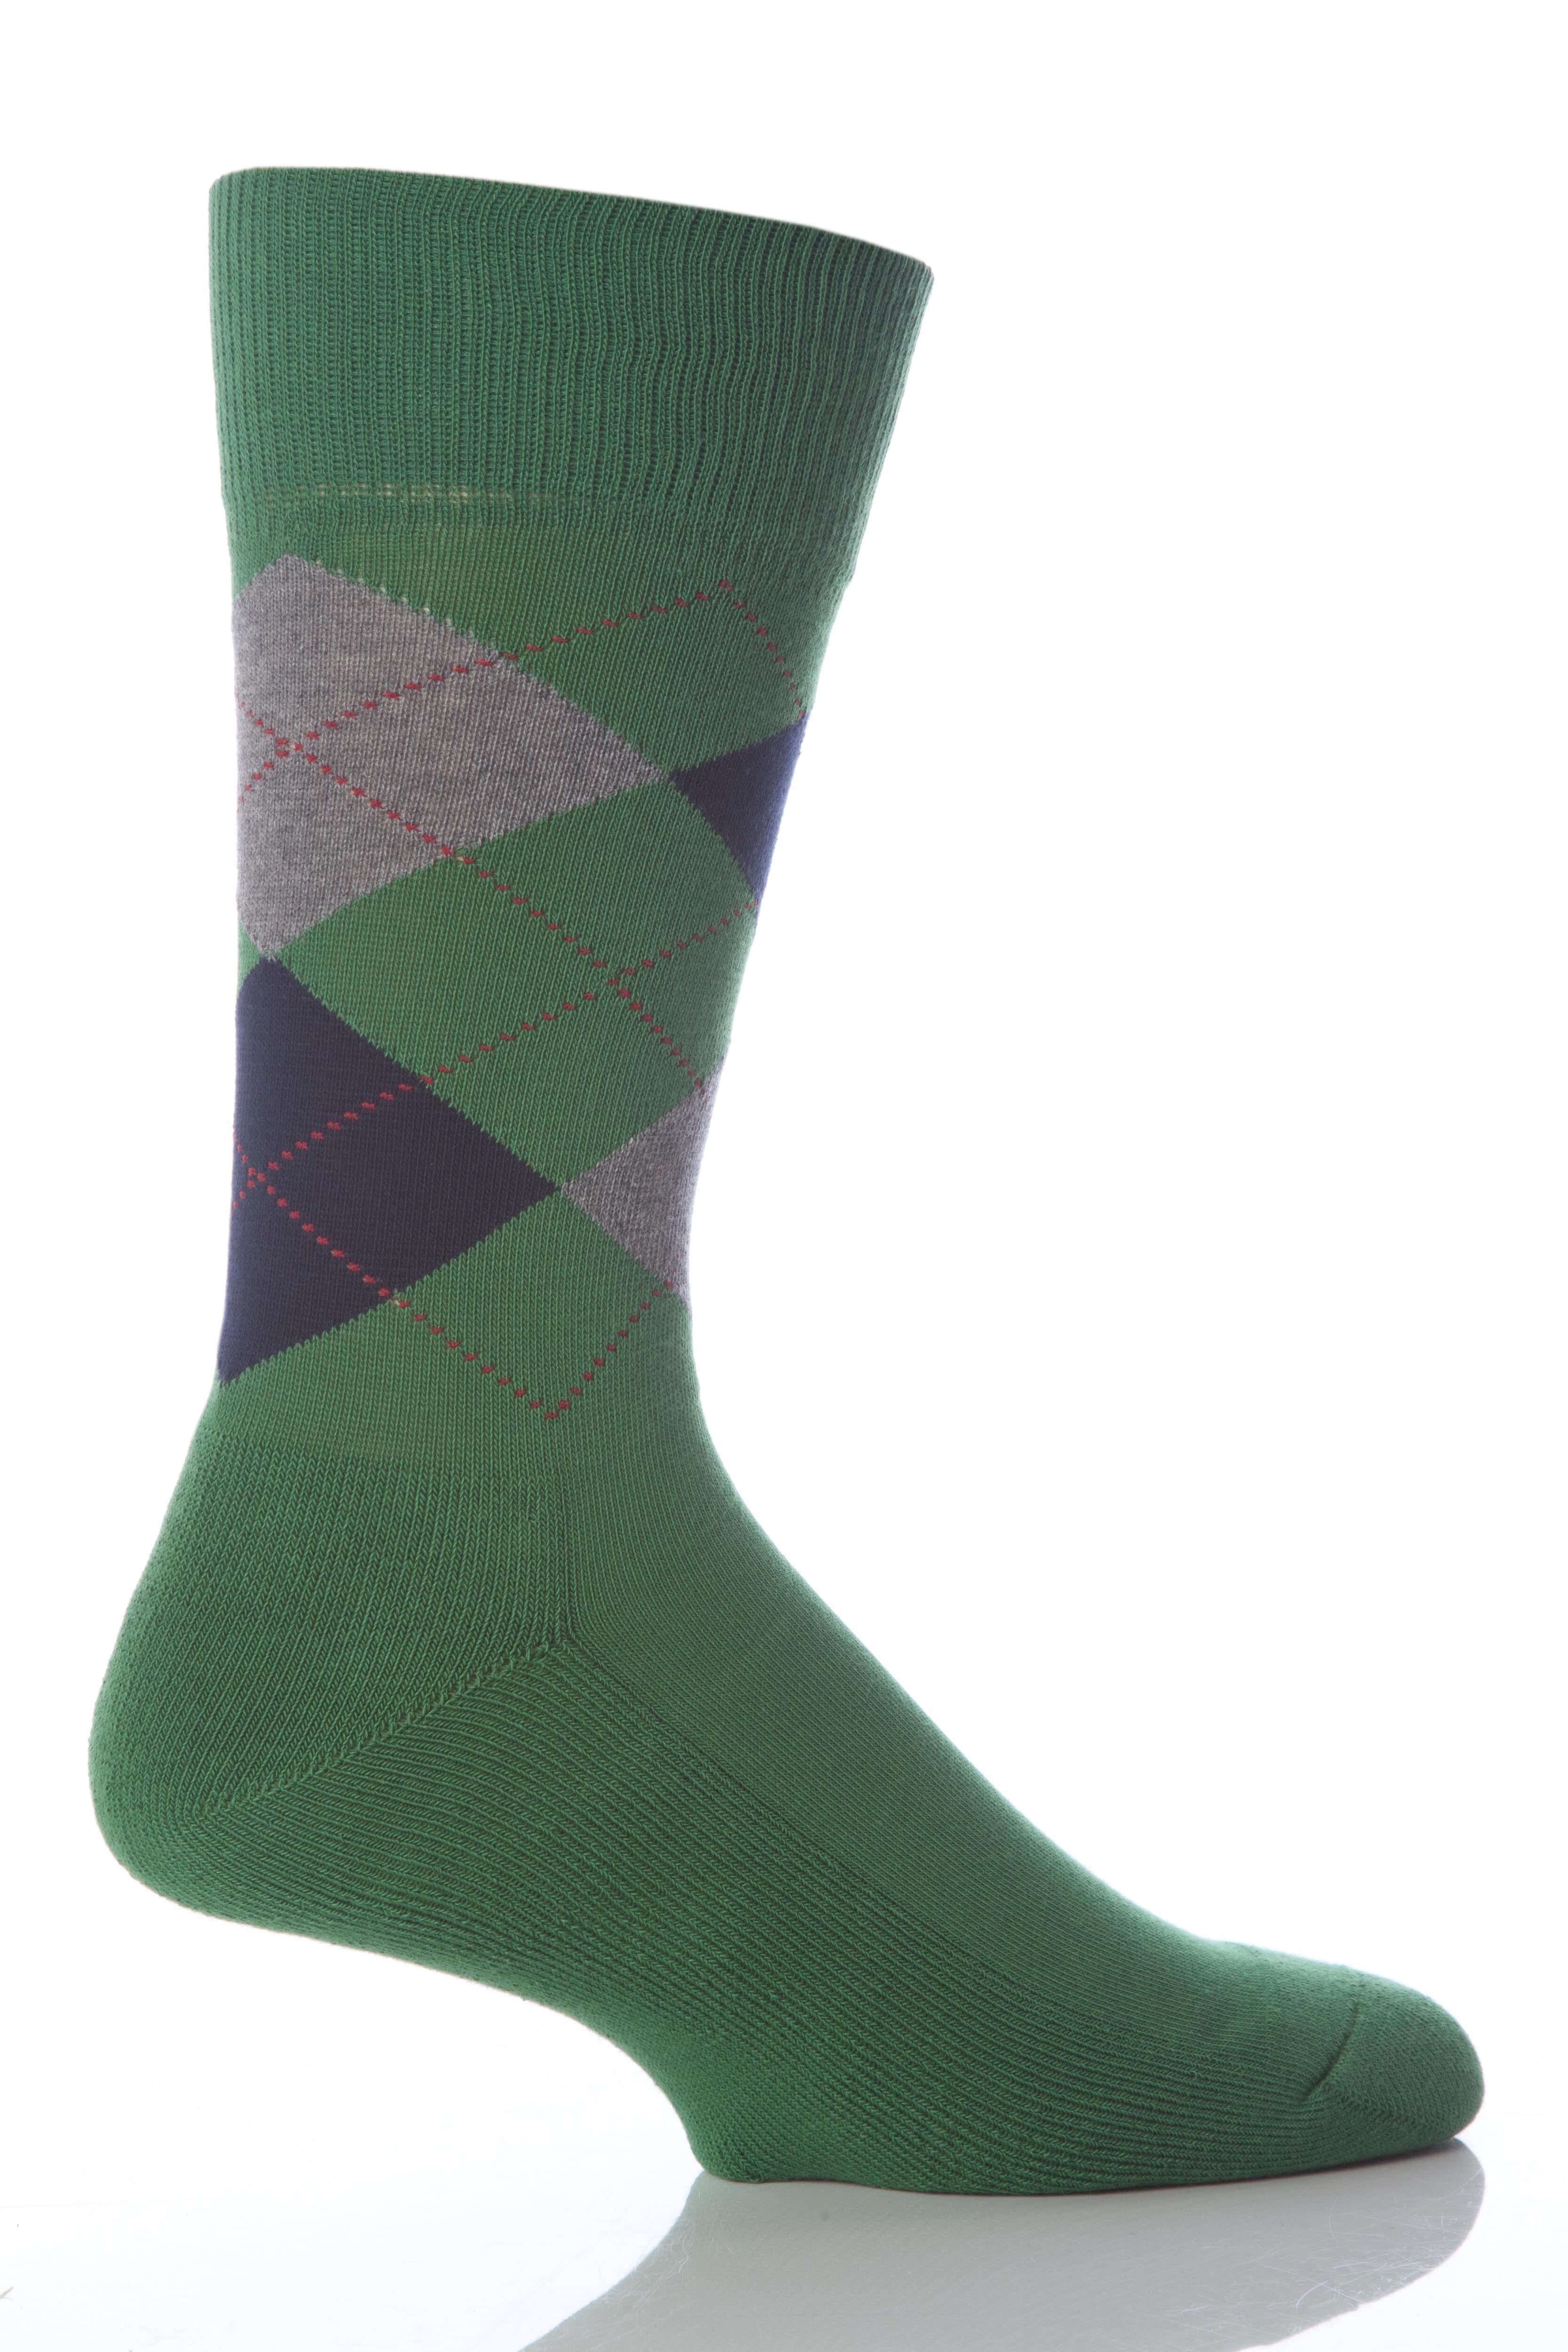 Argyle golf socks | Shop for cheap Men's Socks and Save online